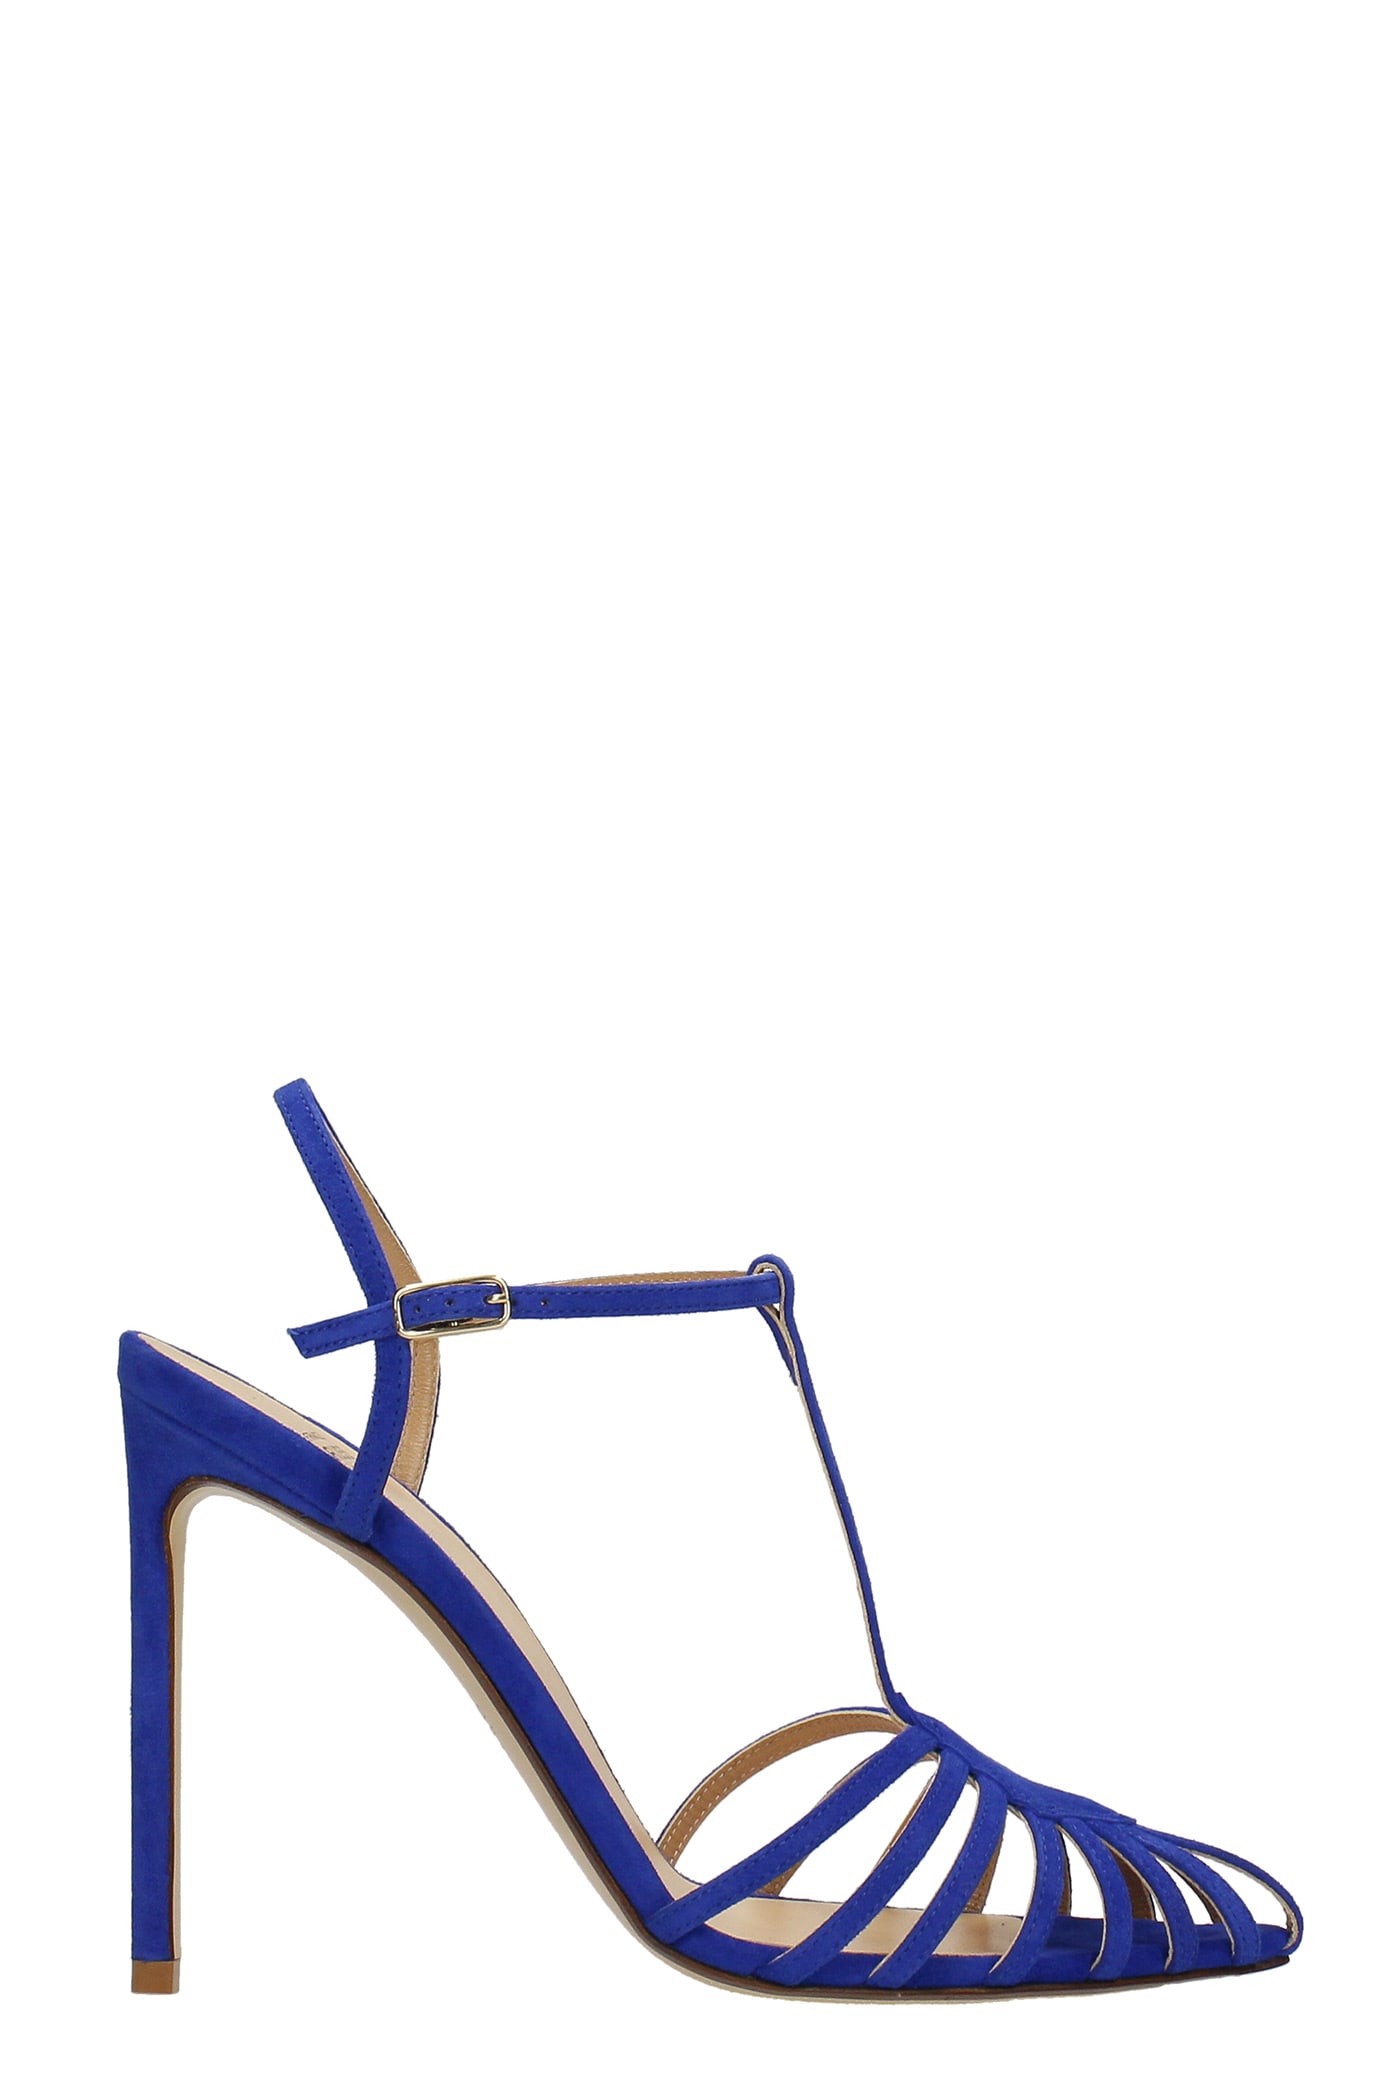 Francesco Russo Sandals In Blue Suede